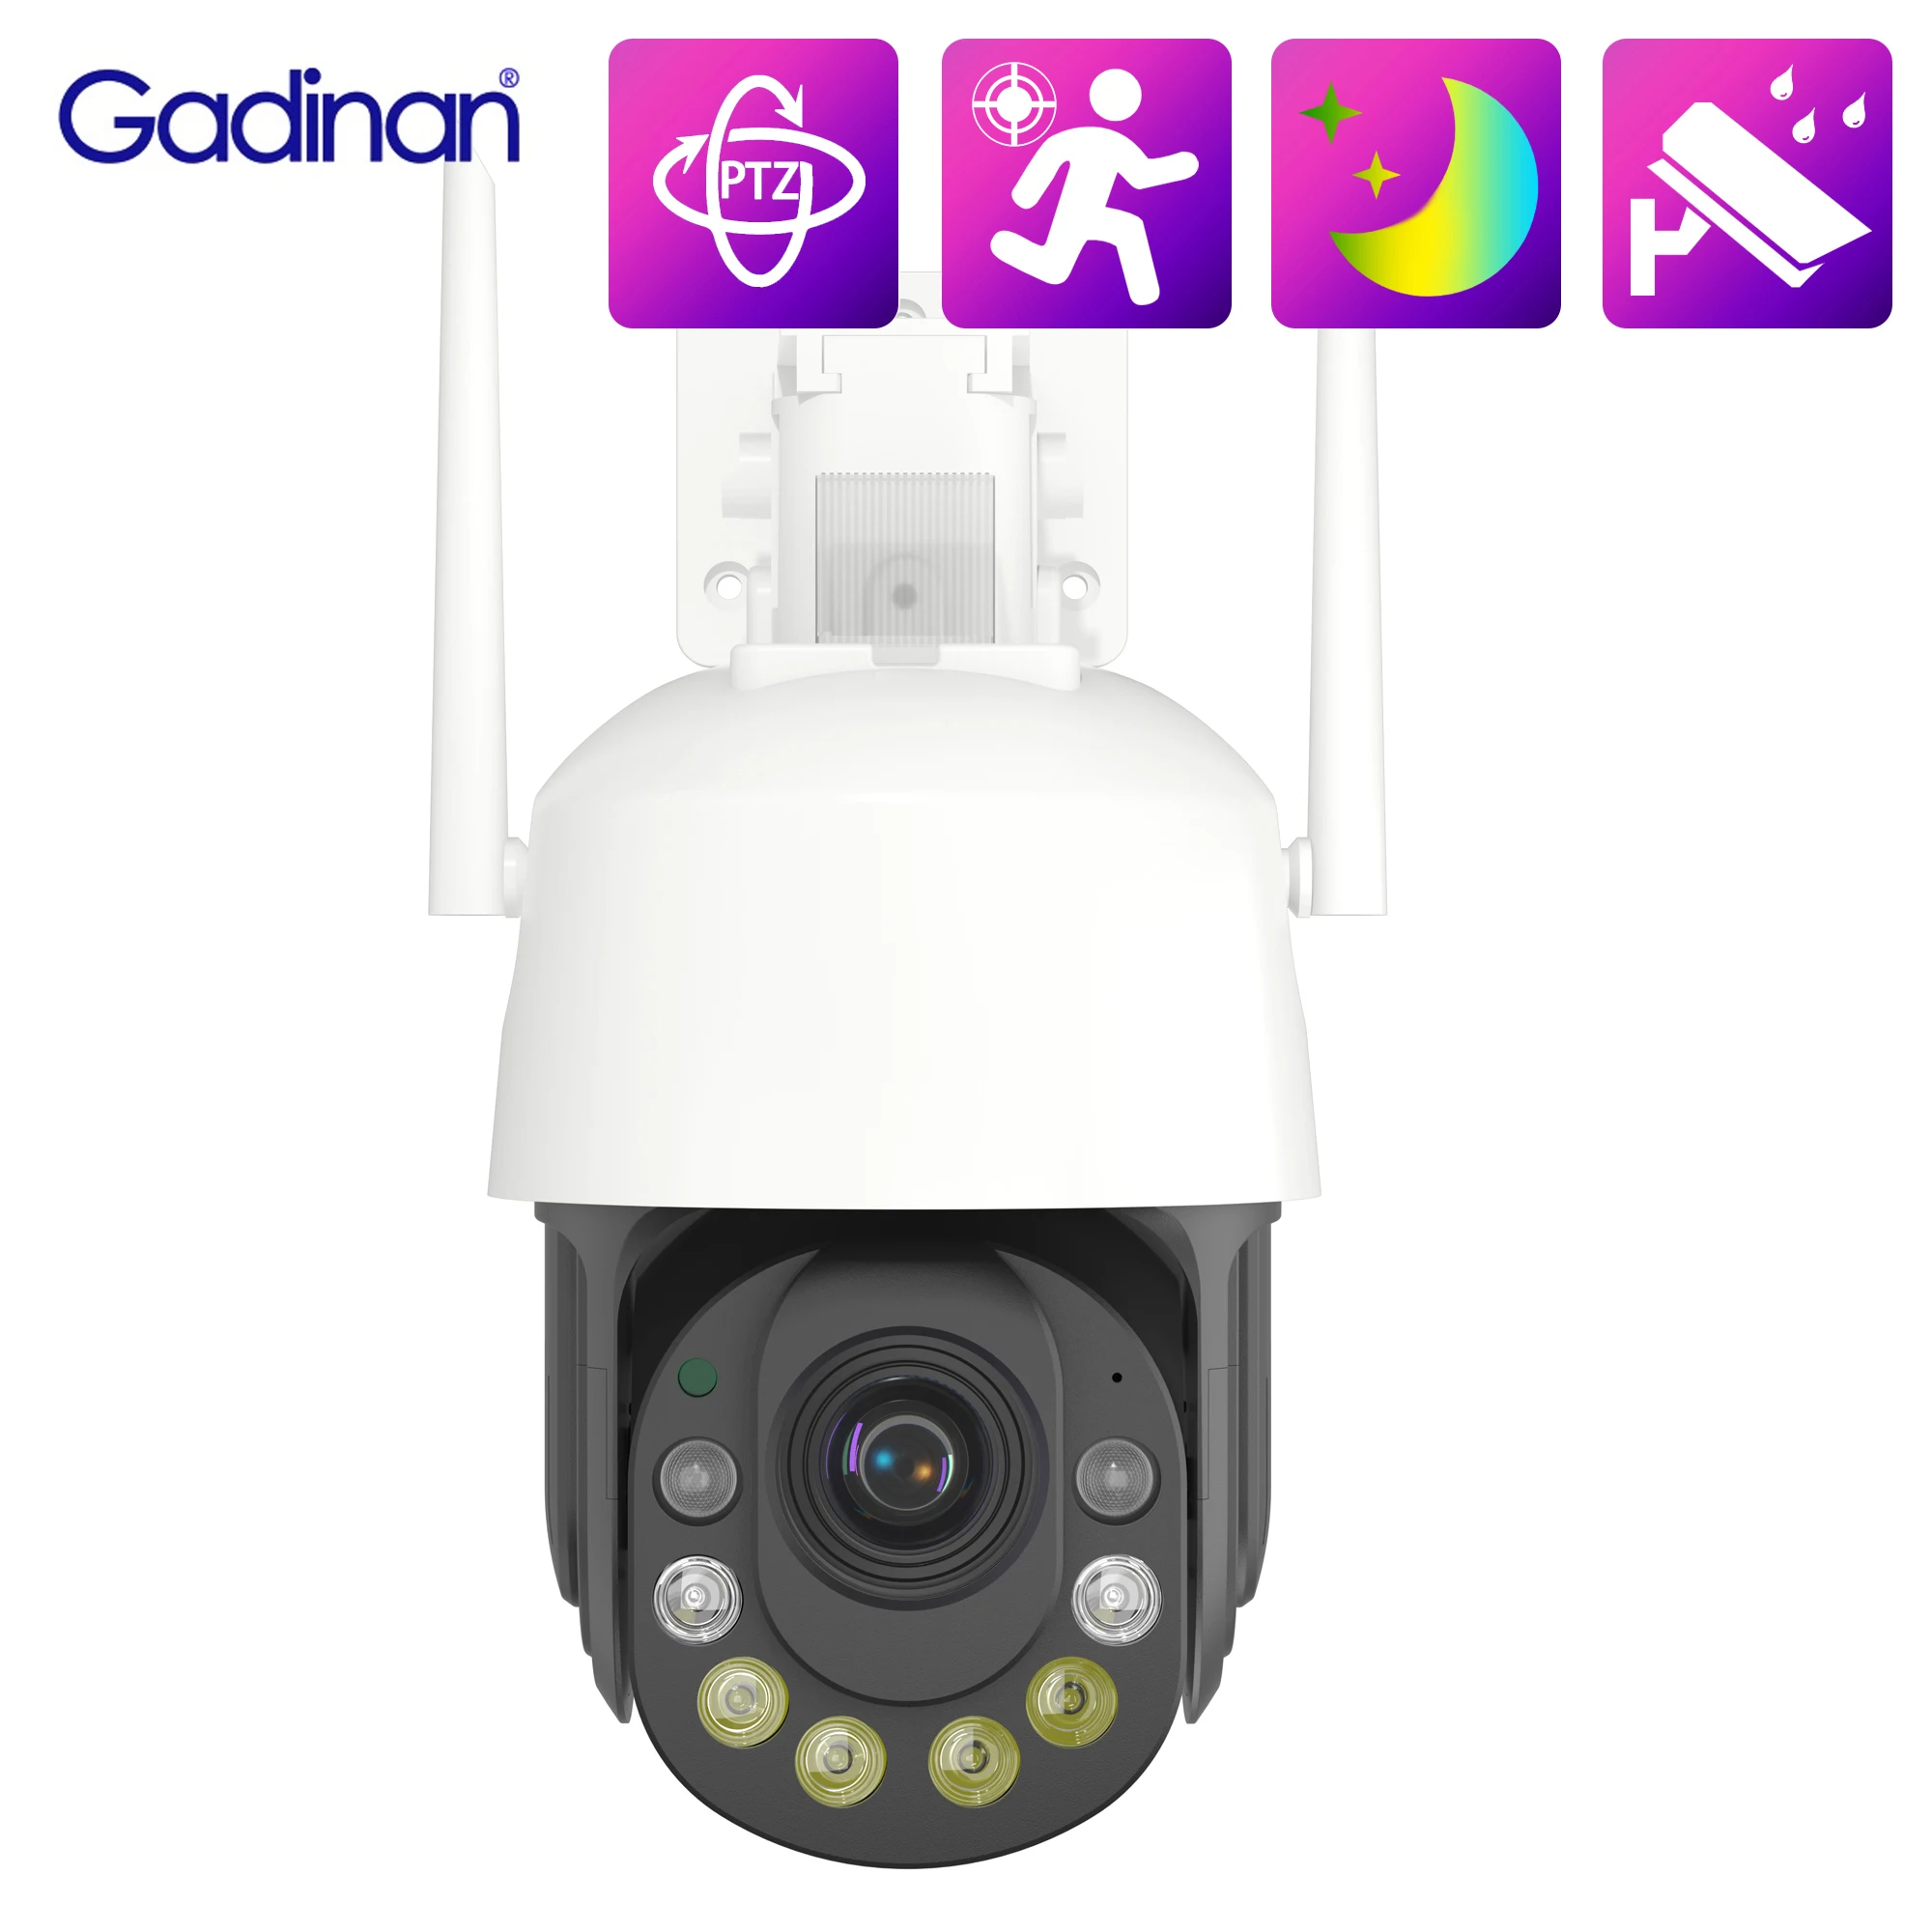 

Gadinan Wifi Outdoor HD PTZ IP Camera Two Way Audio 5MP Color Night Vision Wireless Monitor 36x Zoom AI Human Detection iCSee